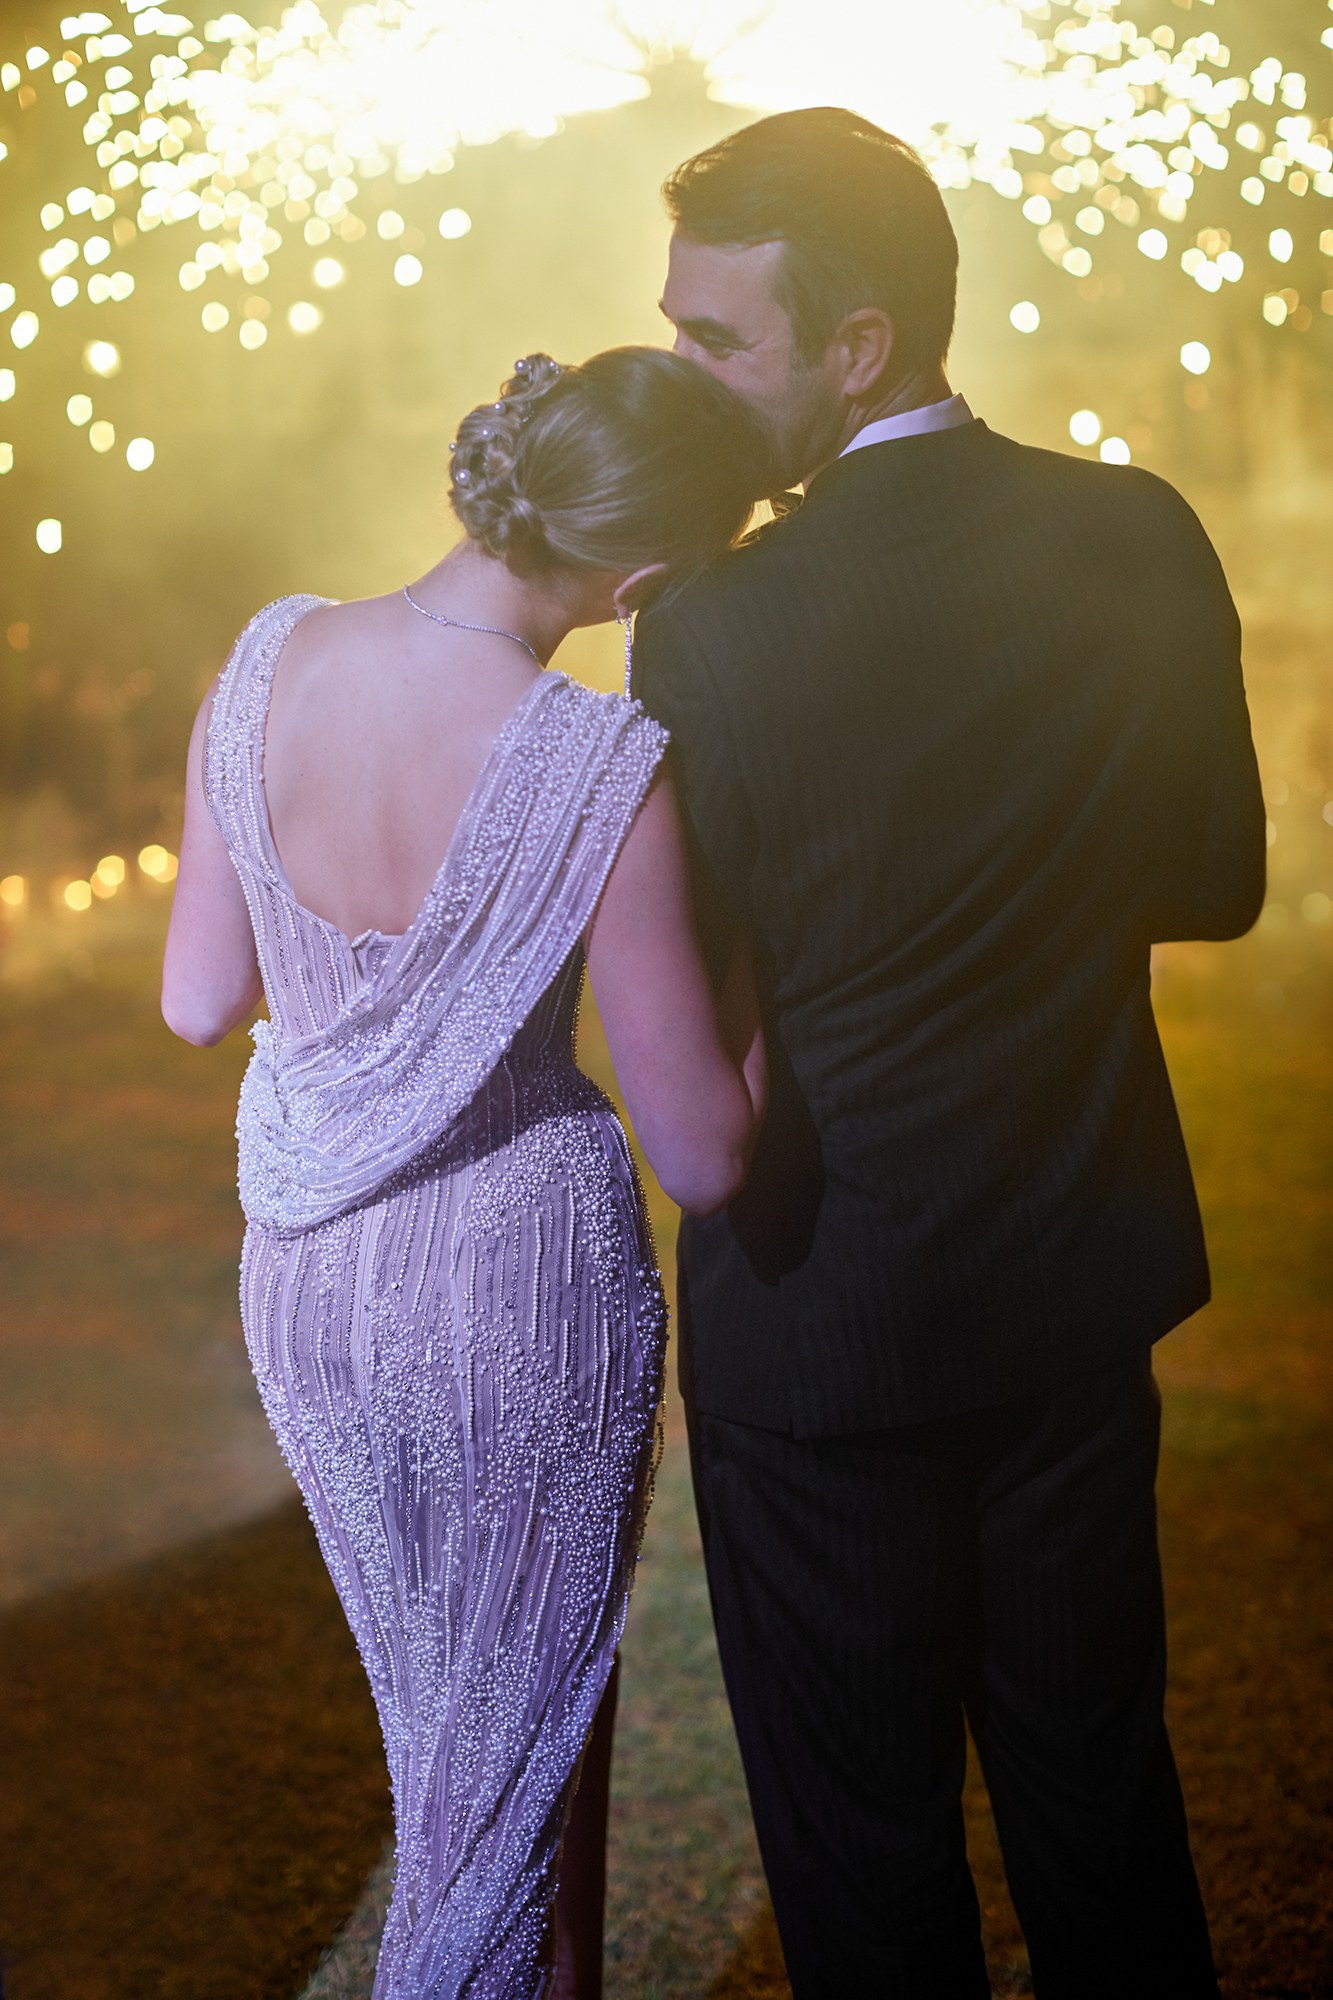 Kate Upton shares photos from her Nov. 4 wedding to Justin Verlander - ABC  News